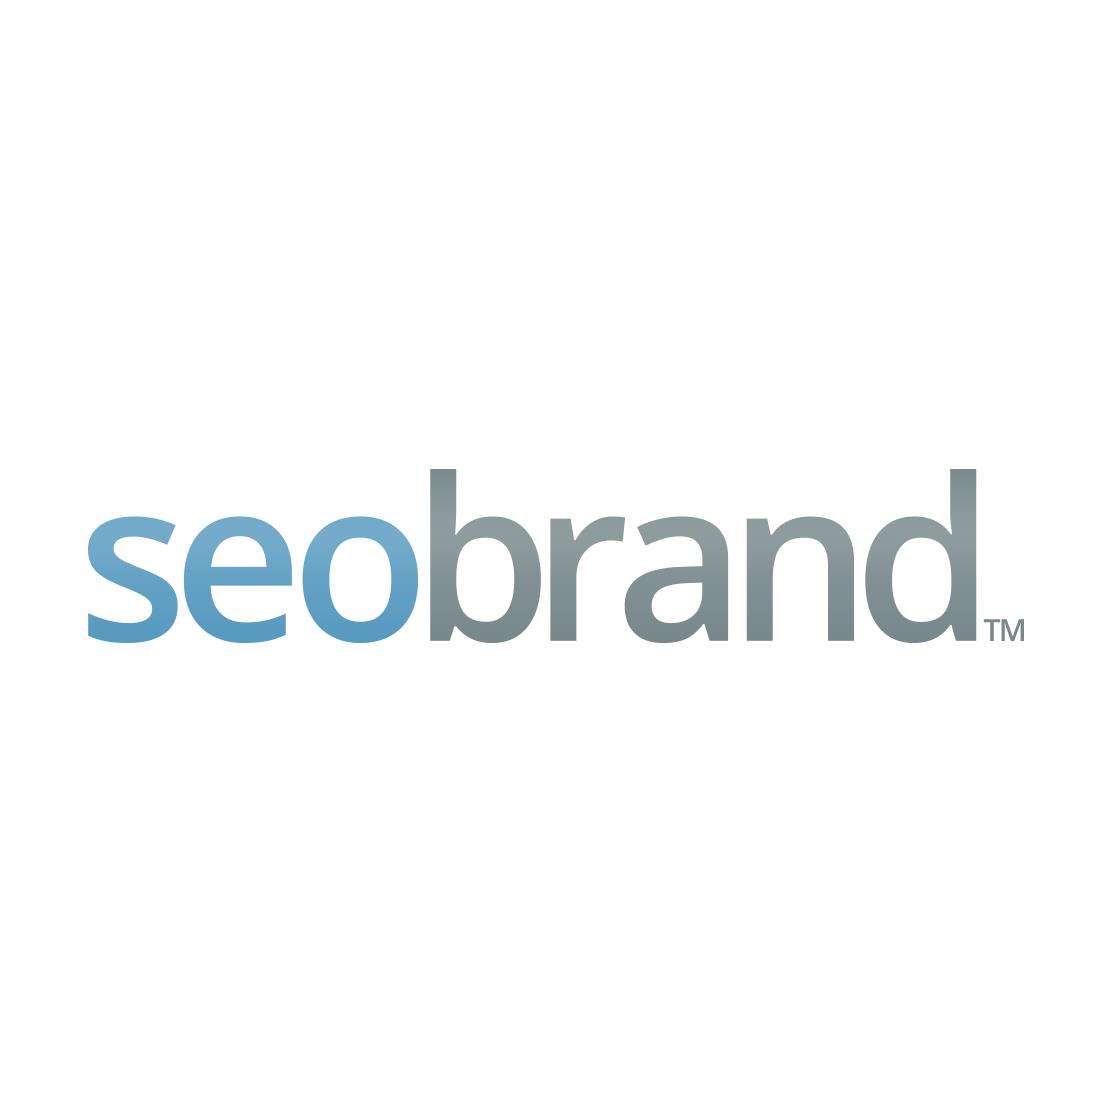 Top Boston SEO Agency Logo: SEO Brand